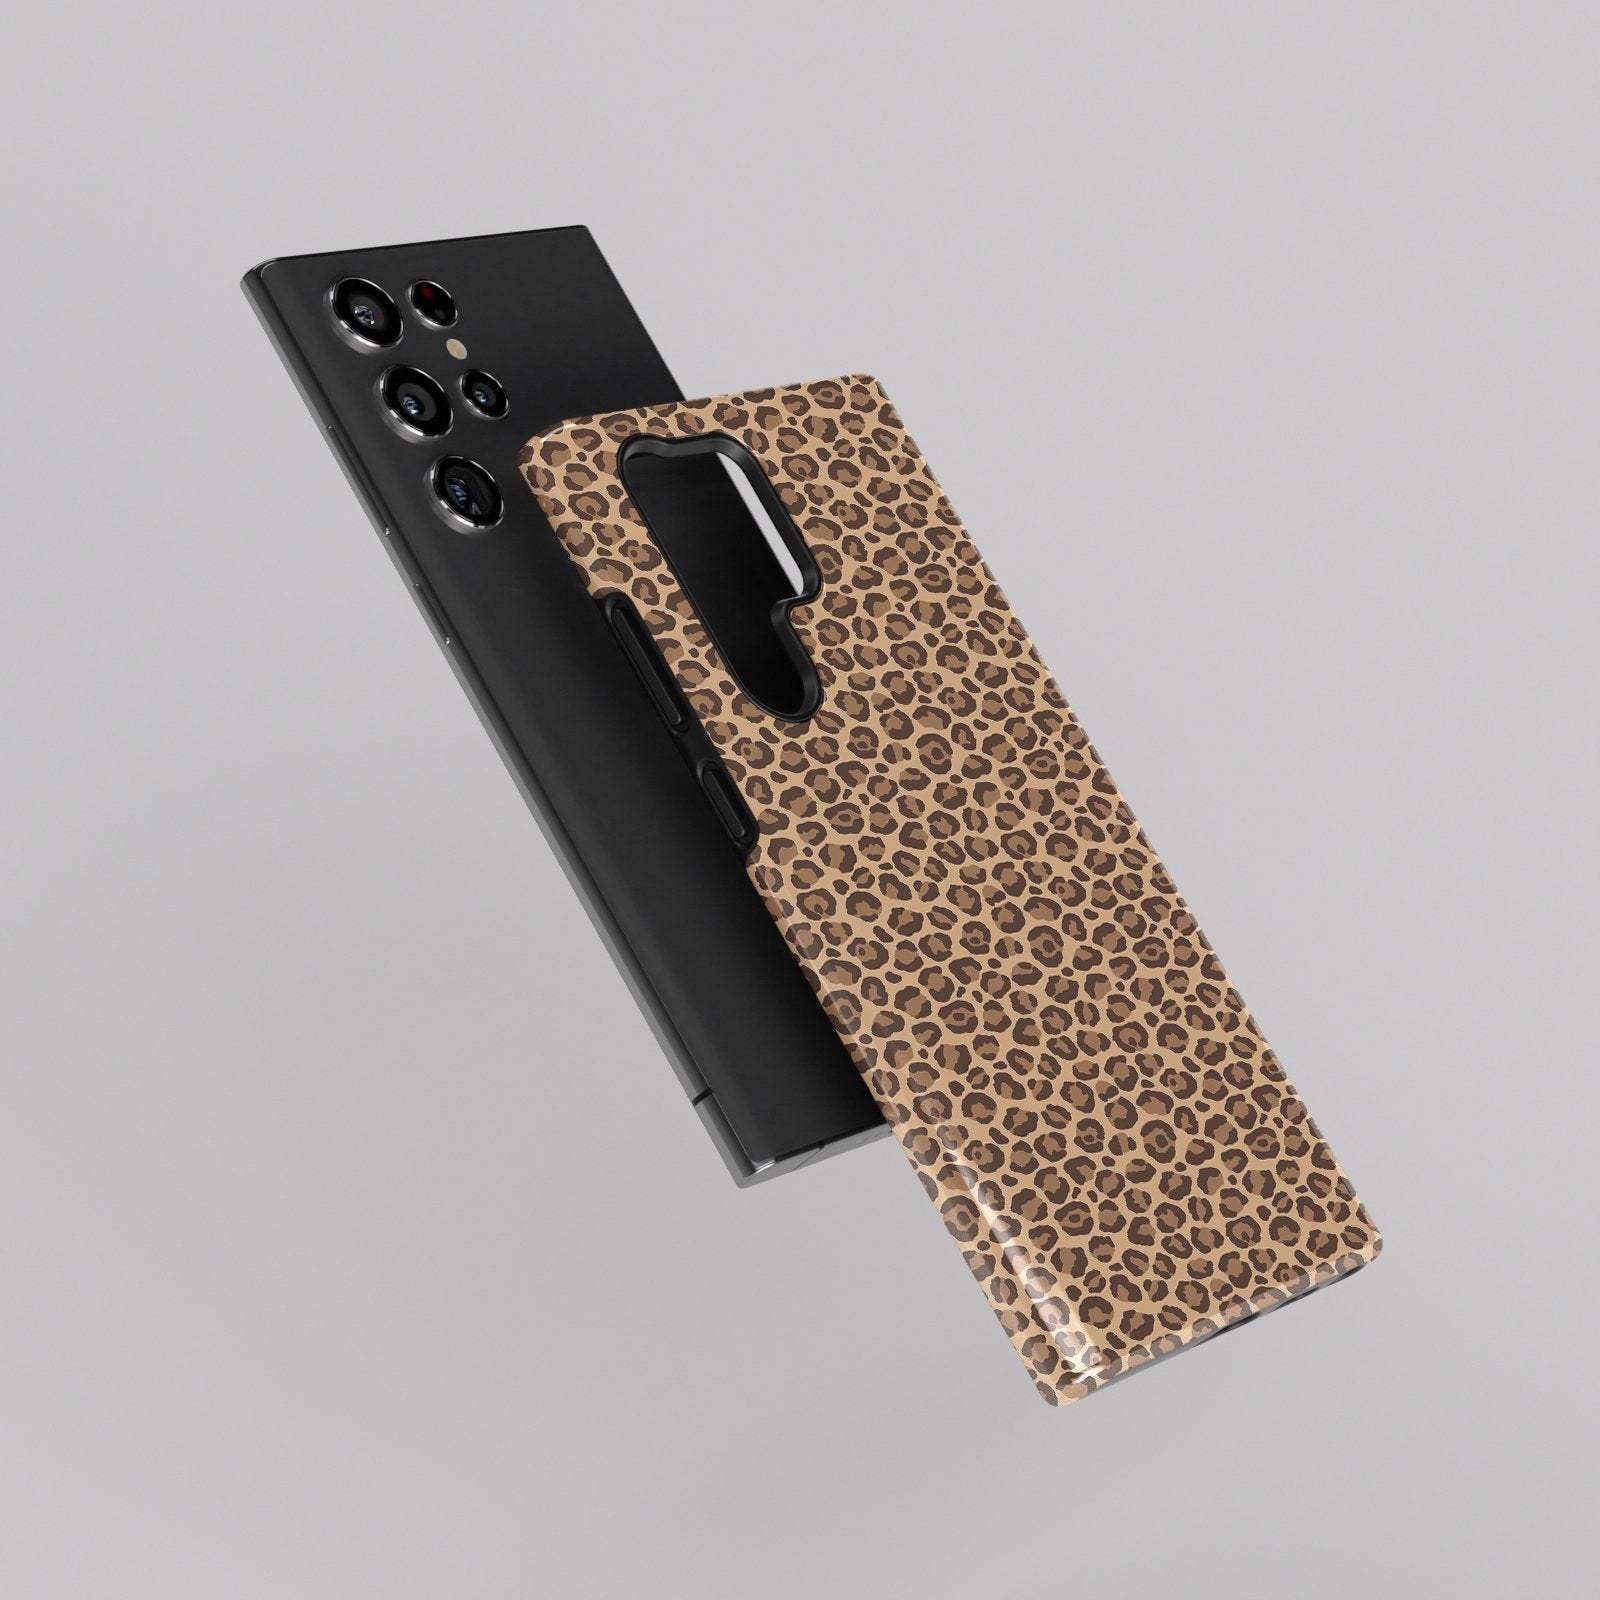 Leopard Essence Beyond the Spots - Samsung Case